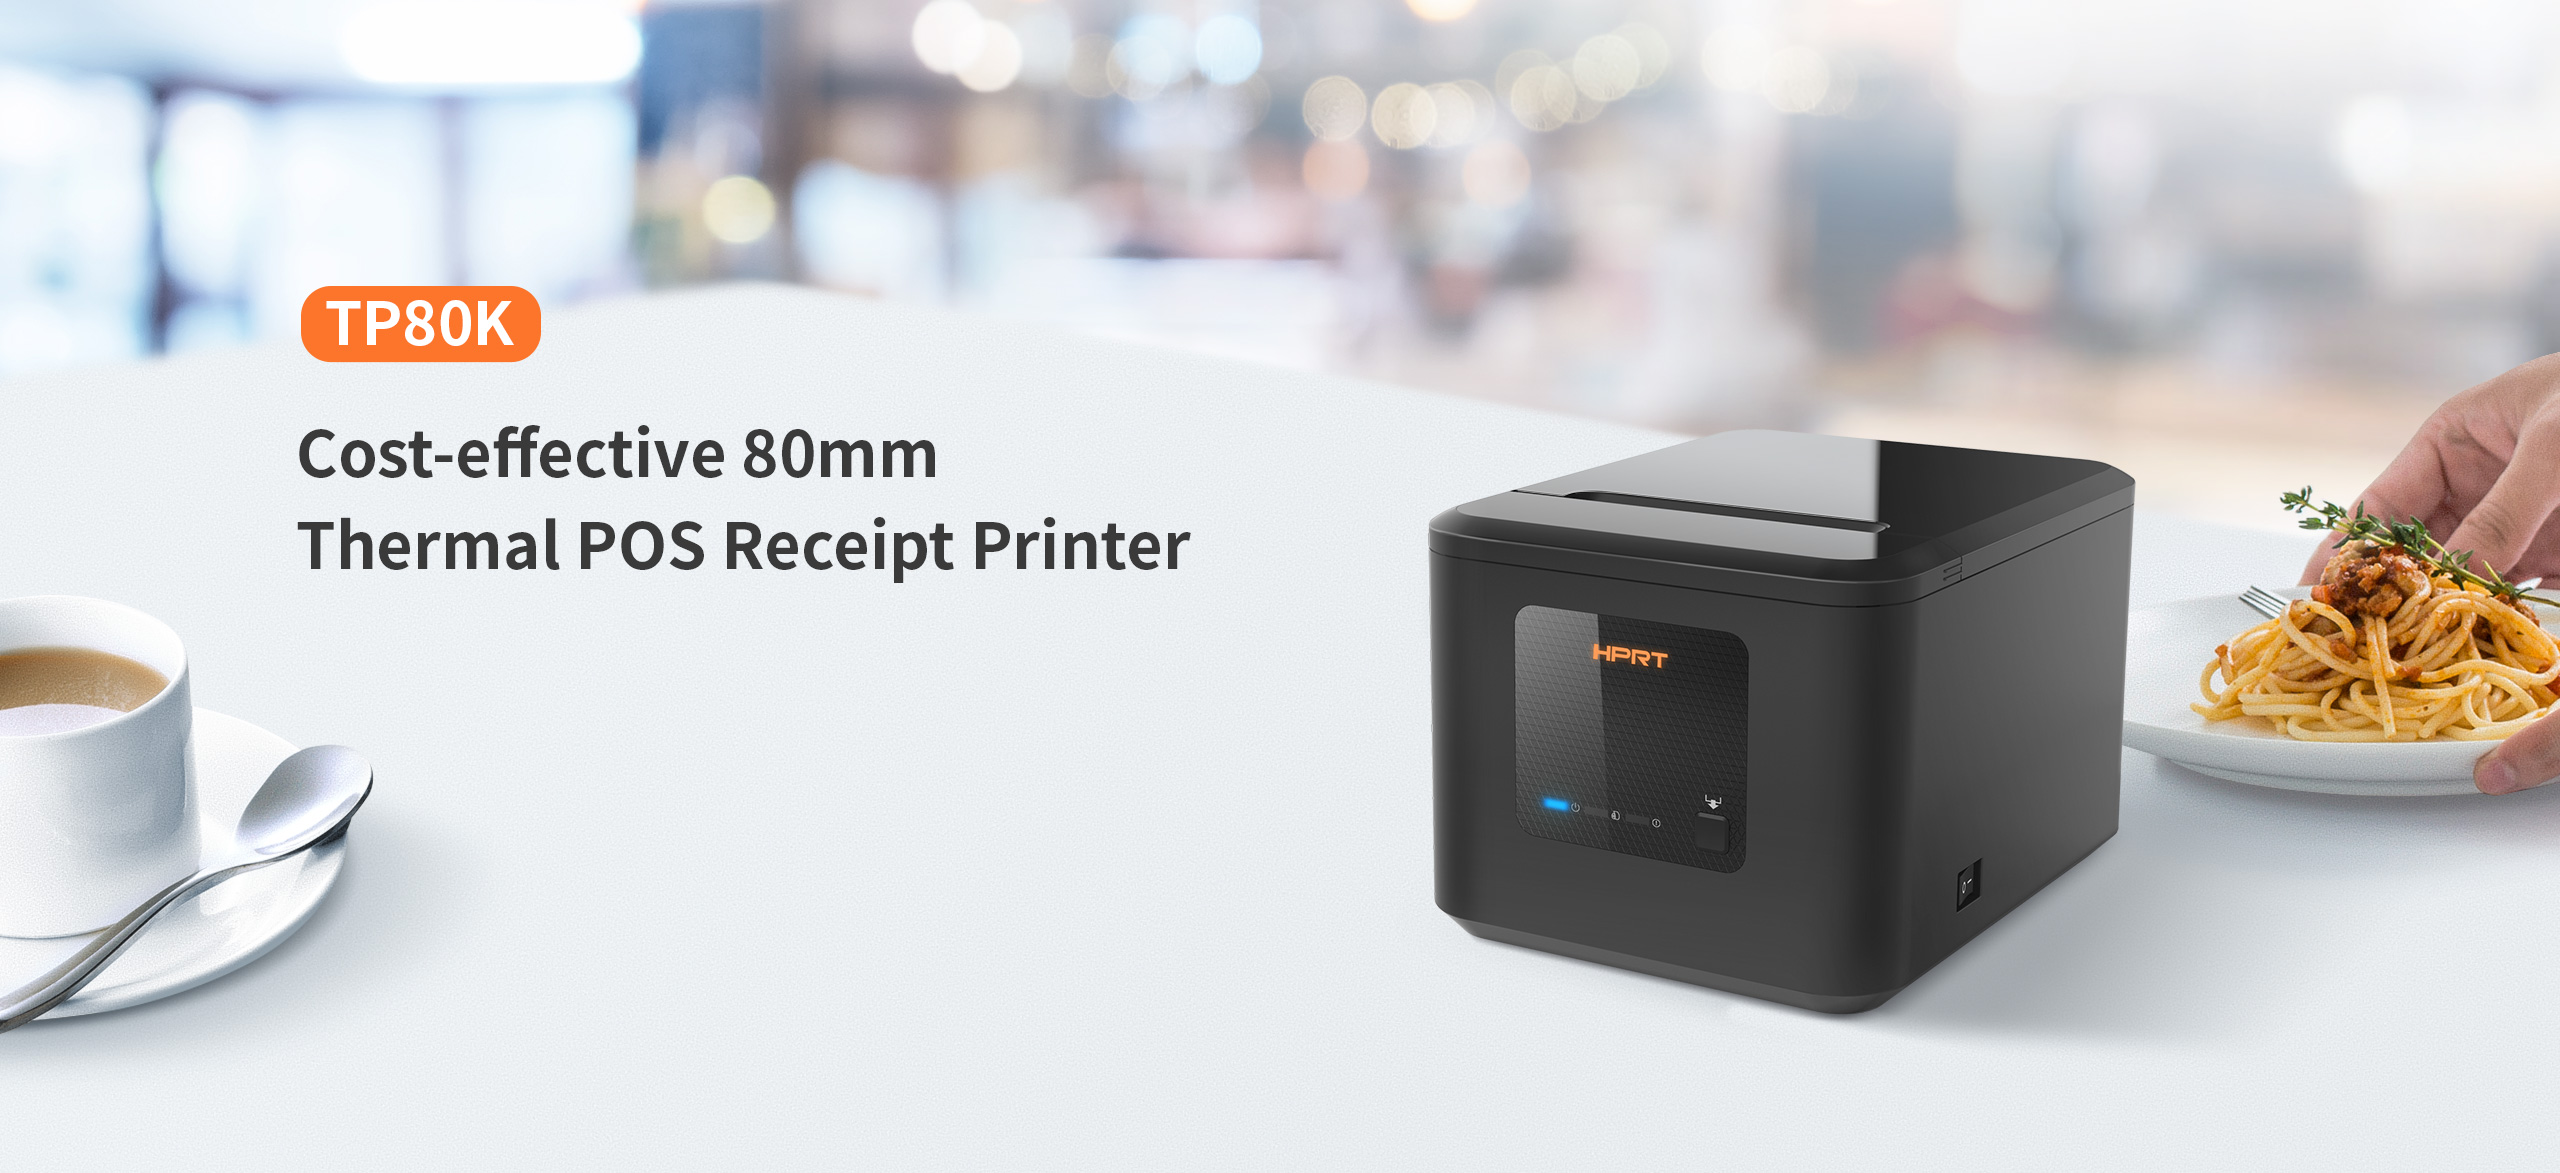 HPRT cost-effective pos printer TP80K